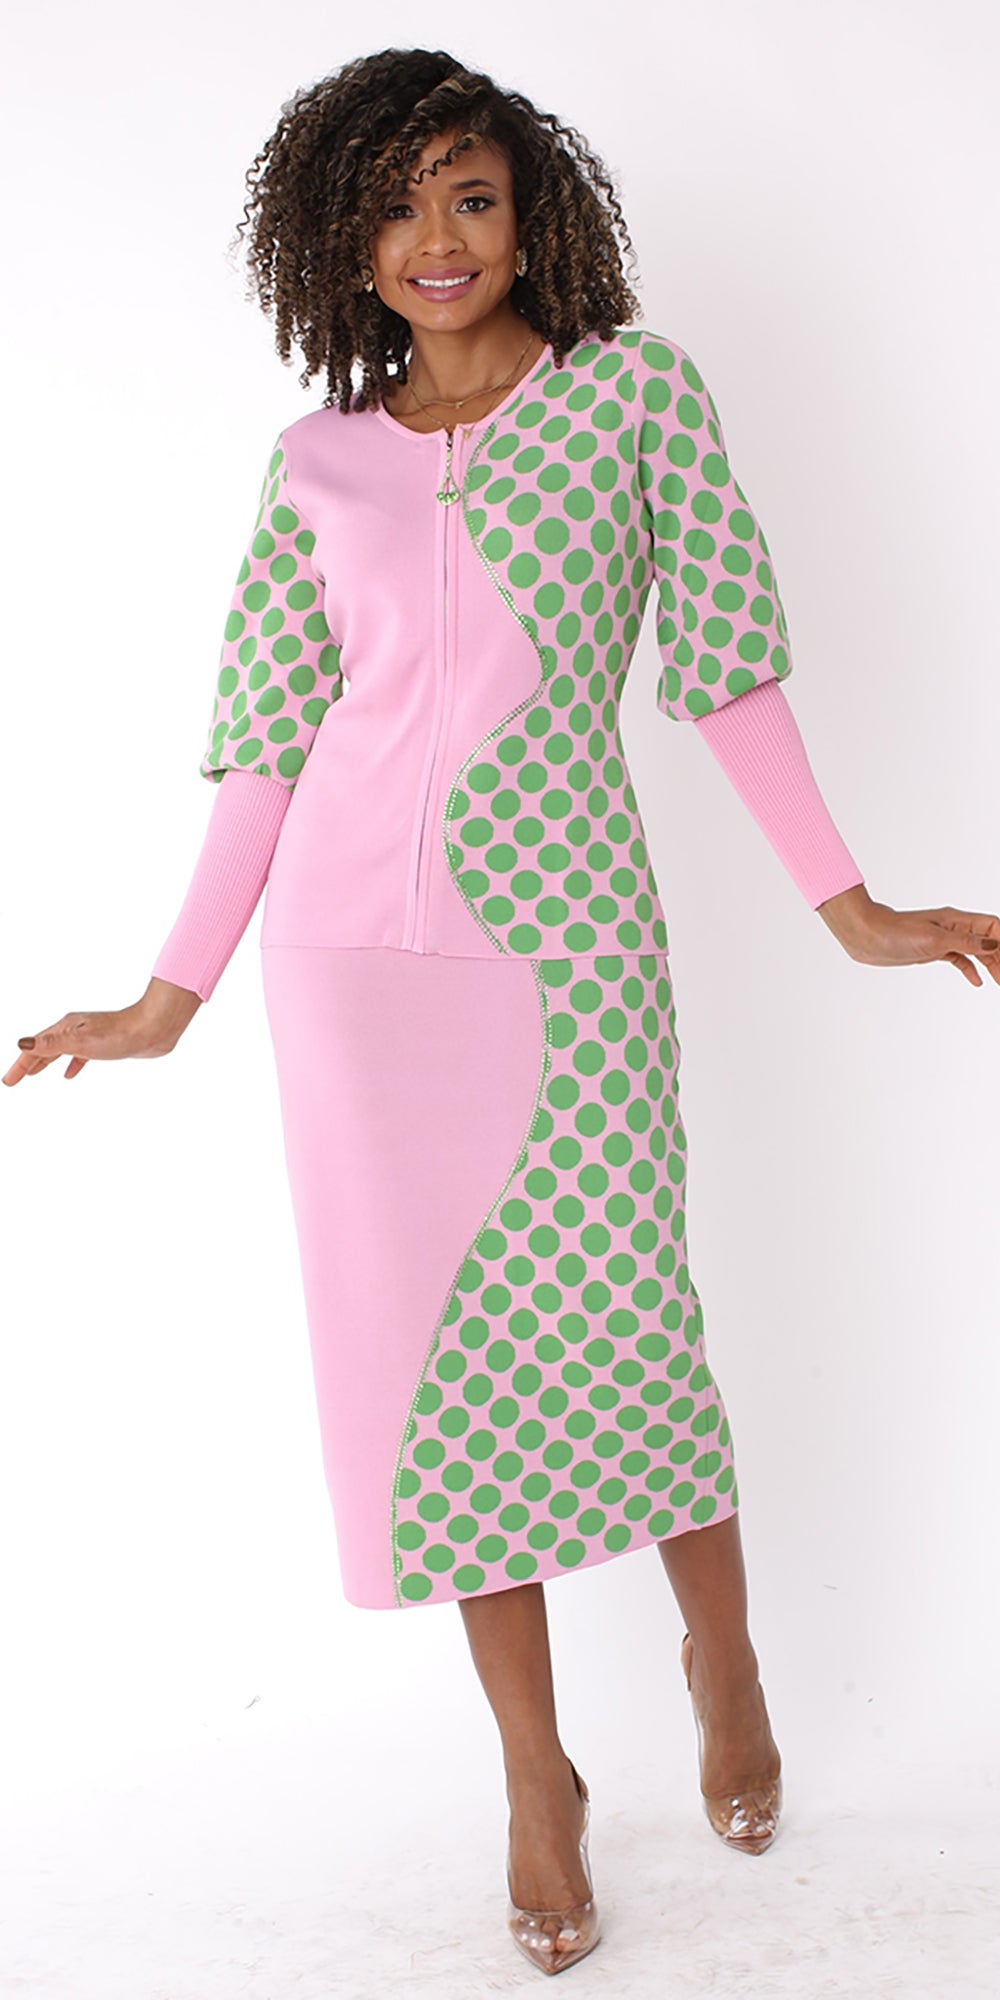 Kayla 5254 - Pink Green -Long-Sleeve Polka-Dot Wave Design Knit Skirt Suit With Rhinestones